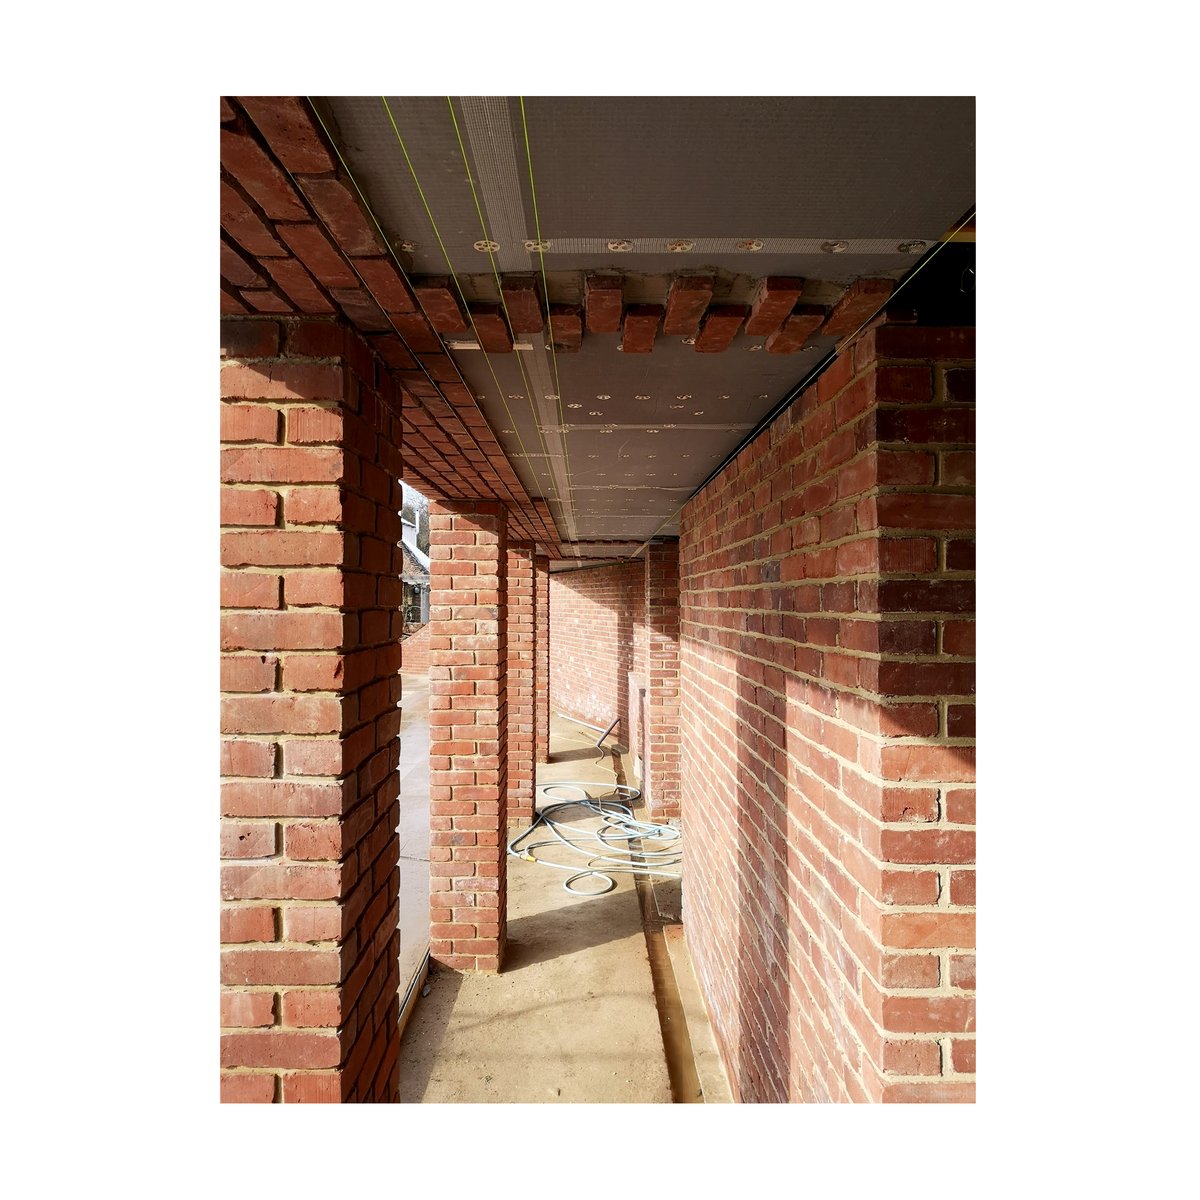 Brick soffit slips and shadows #knoxbhavan #workinprogress #pembury #bricksoffitslips #shadows